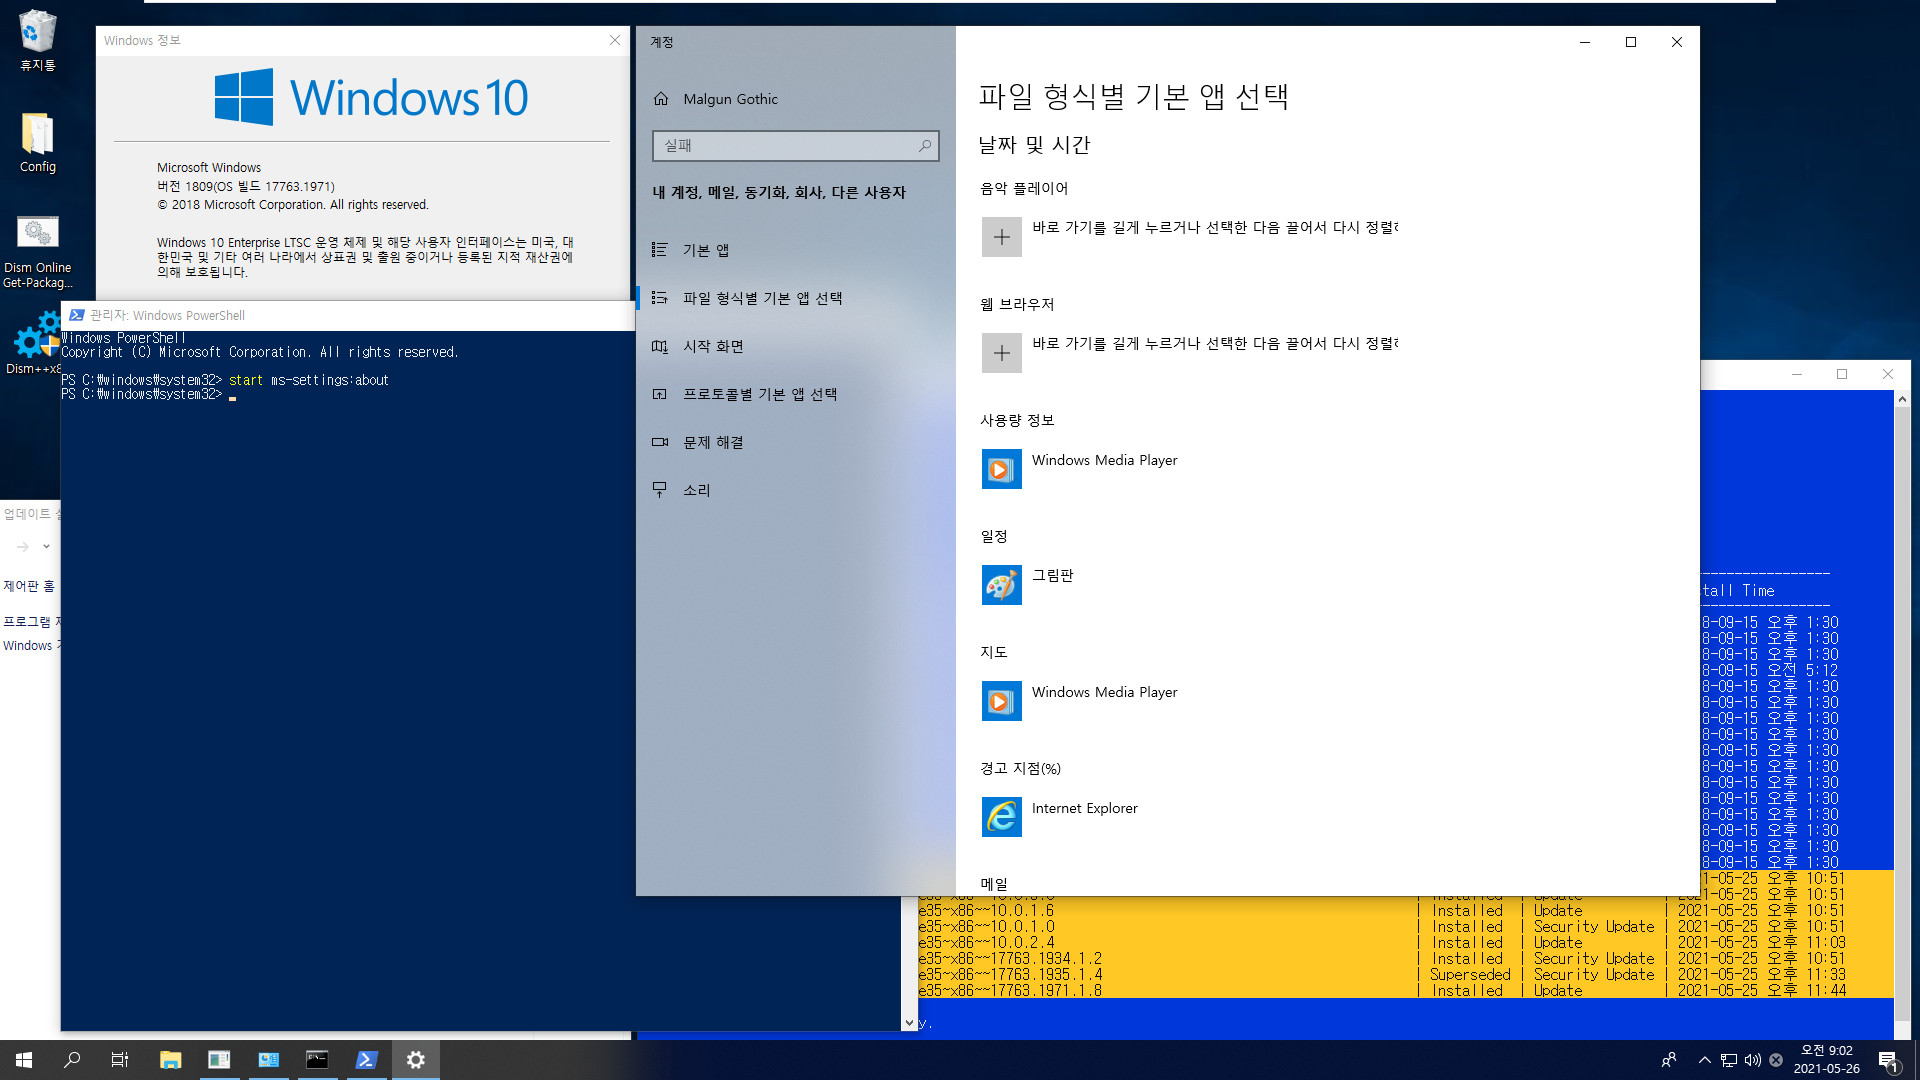 Windows 10 Enterprise LTSC 2019 - 버전 1809 (OS 빌드 17763.1971) - KB5003217 선택적 업데이트의 설정창 꺼짐 현상 테스트 - 명렁어 방식으로는 설정창이 열리는데 불편합니다 2021-05-26_090257.jpg